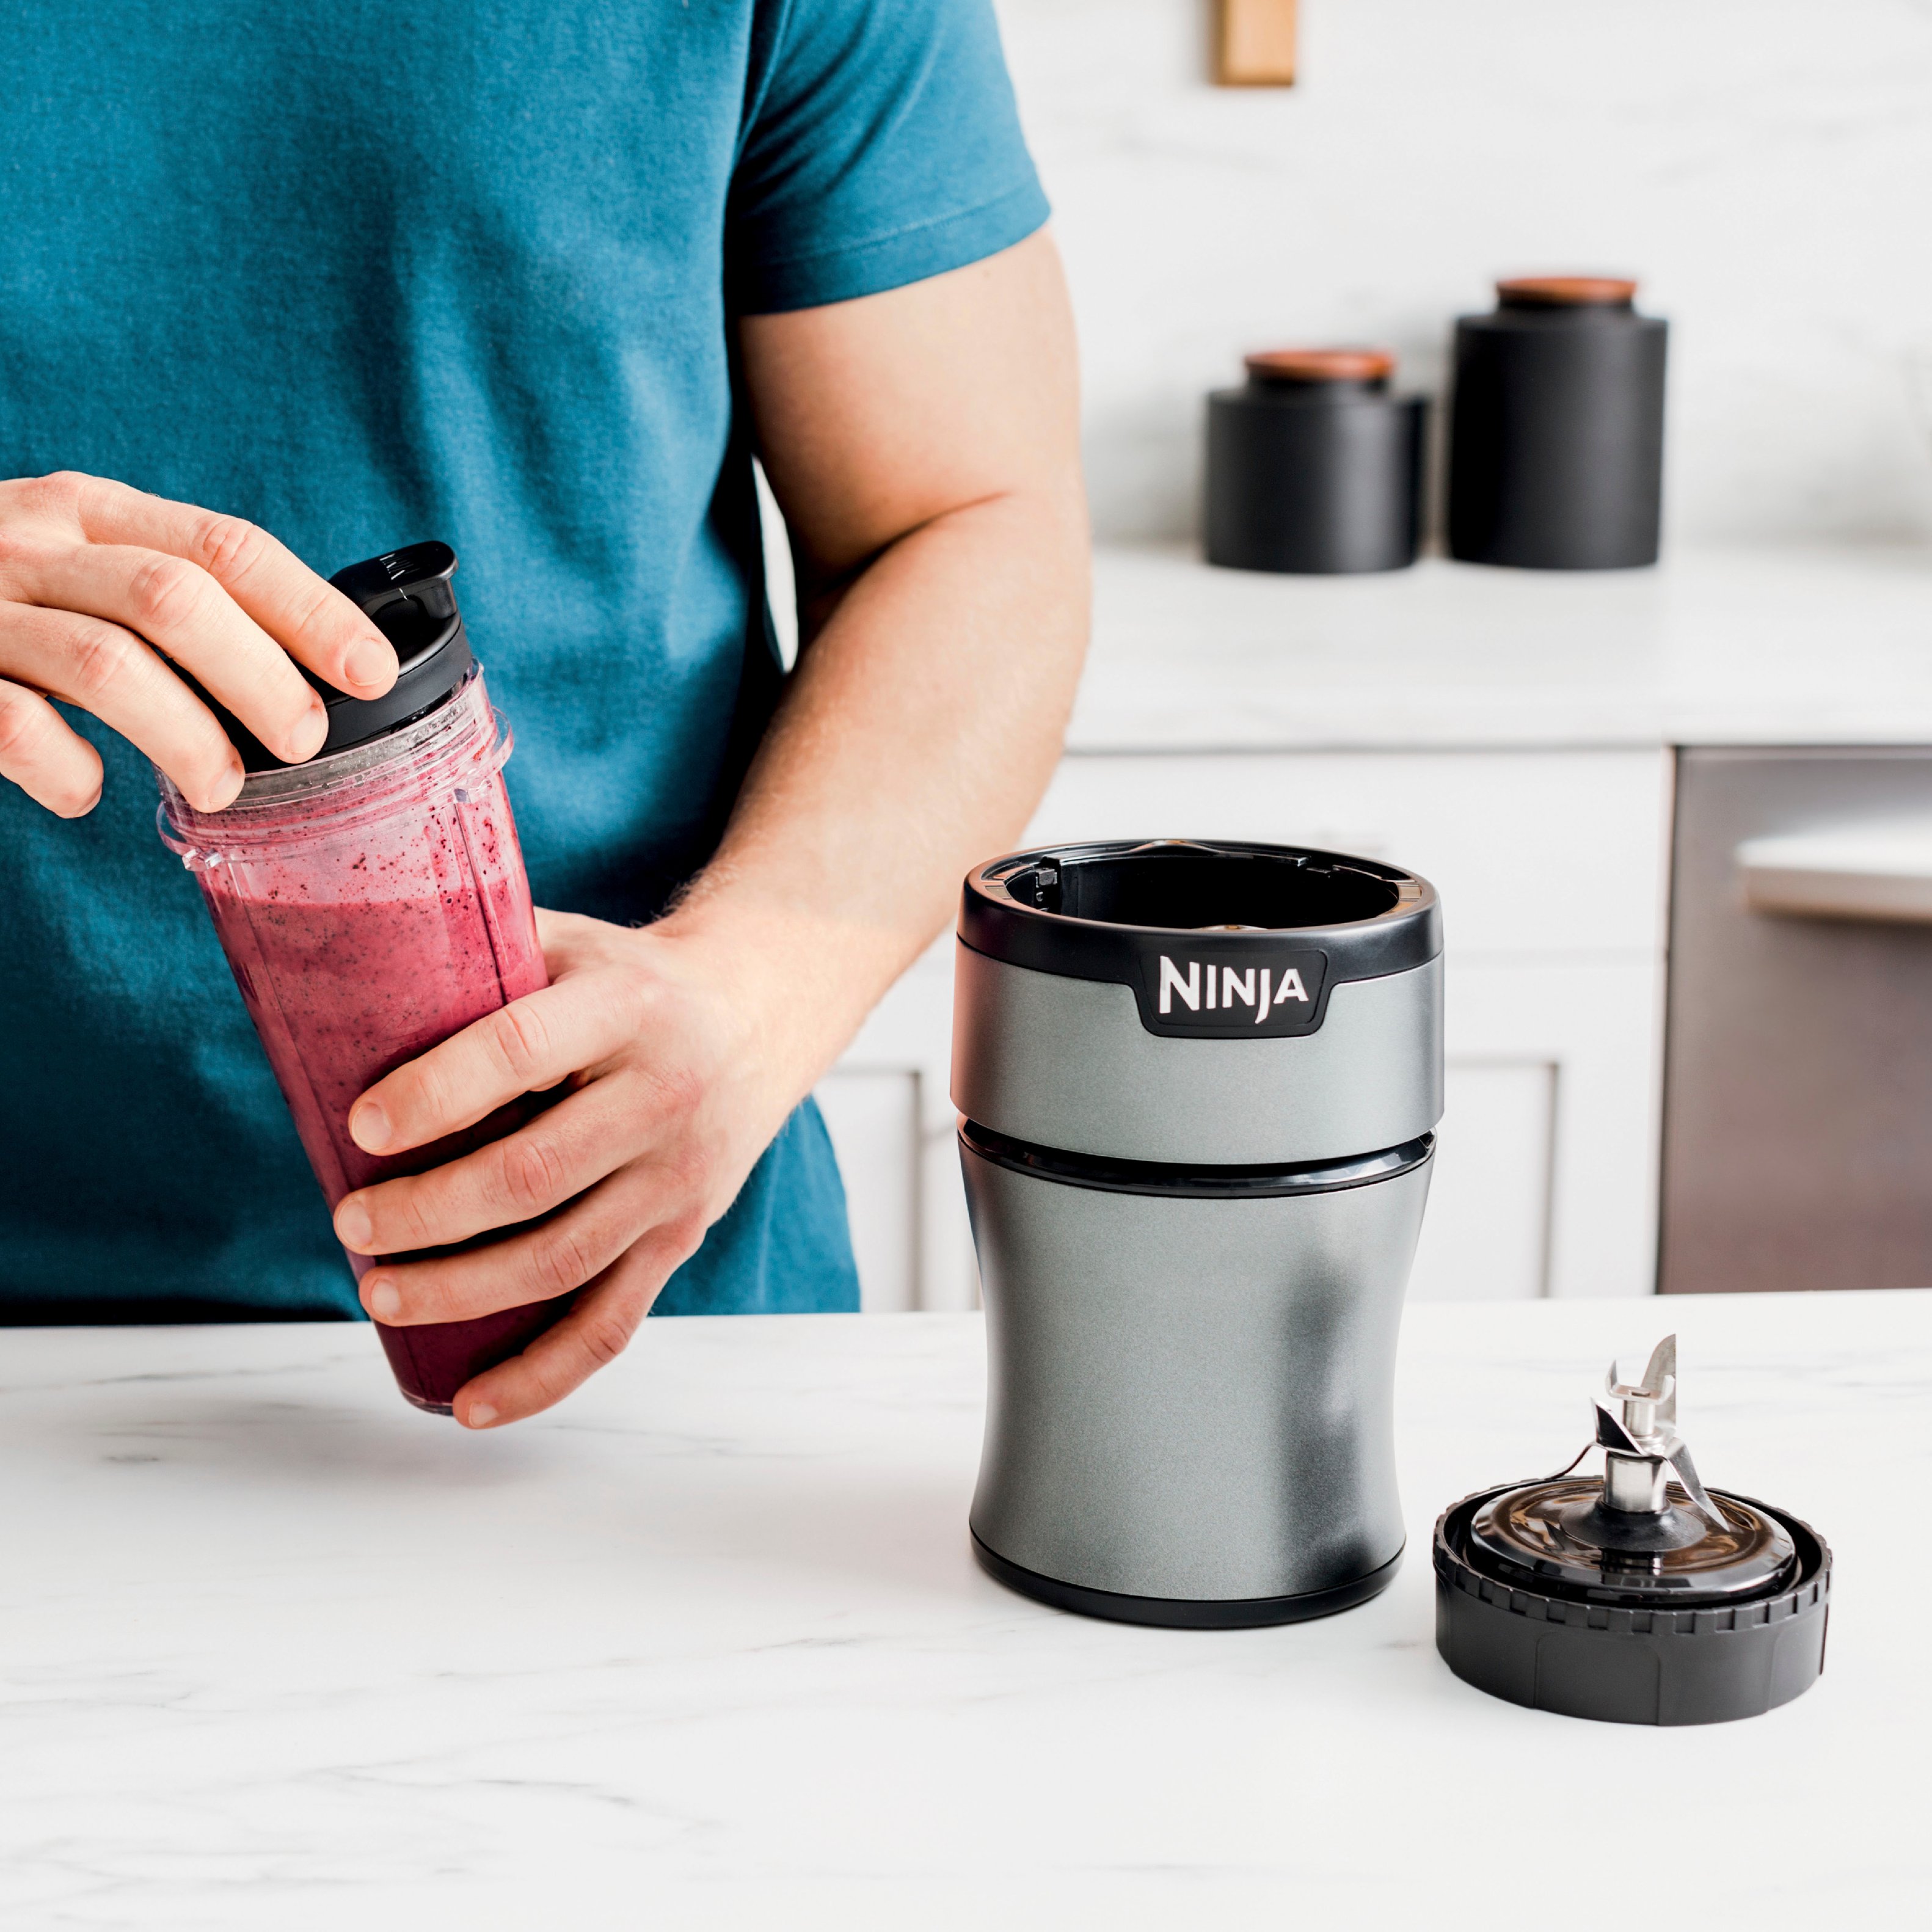 Ninja BN301 Nutri-Blender Plus Compact Personal Blender, 900-Peak-Watt  Motor, Frozen Drinks, Smoothies, Sauces & More, (3) 20 oz. To-Go Cups, (2)